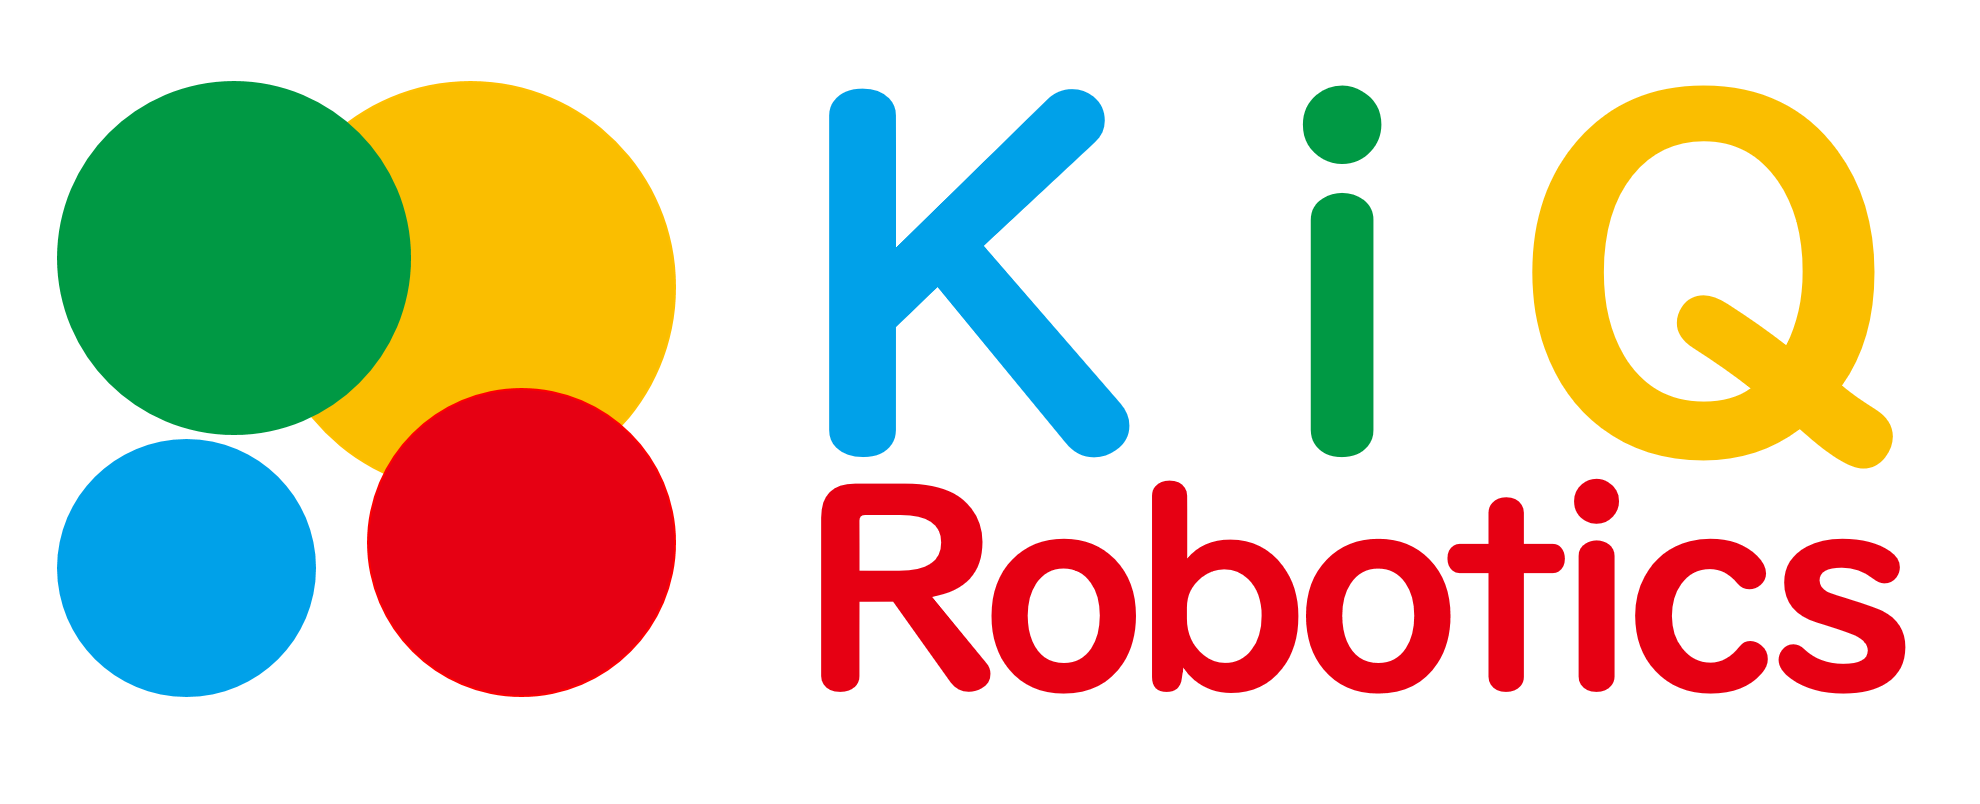 KiQ Robotics株式会社